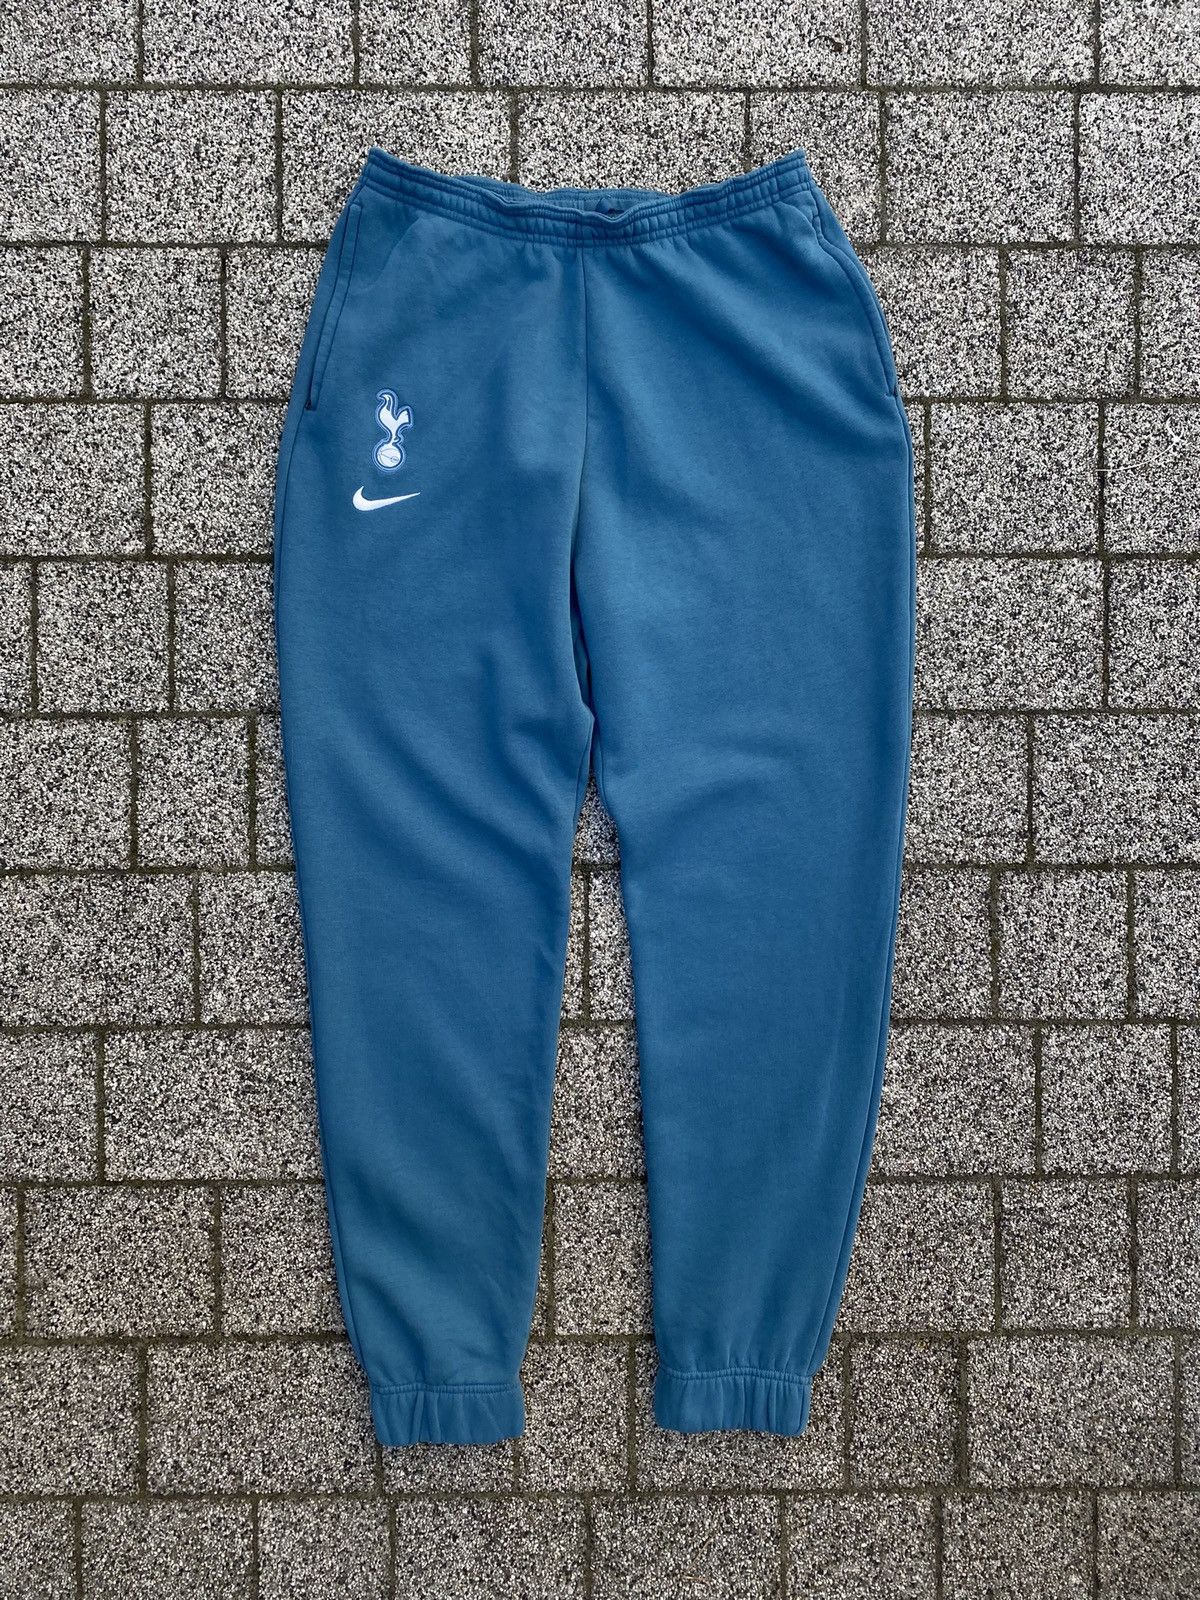 Nike Tottenham spurs Nike tech fleece pants 2022/2023 | Grailed